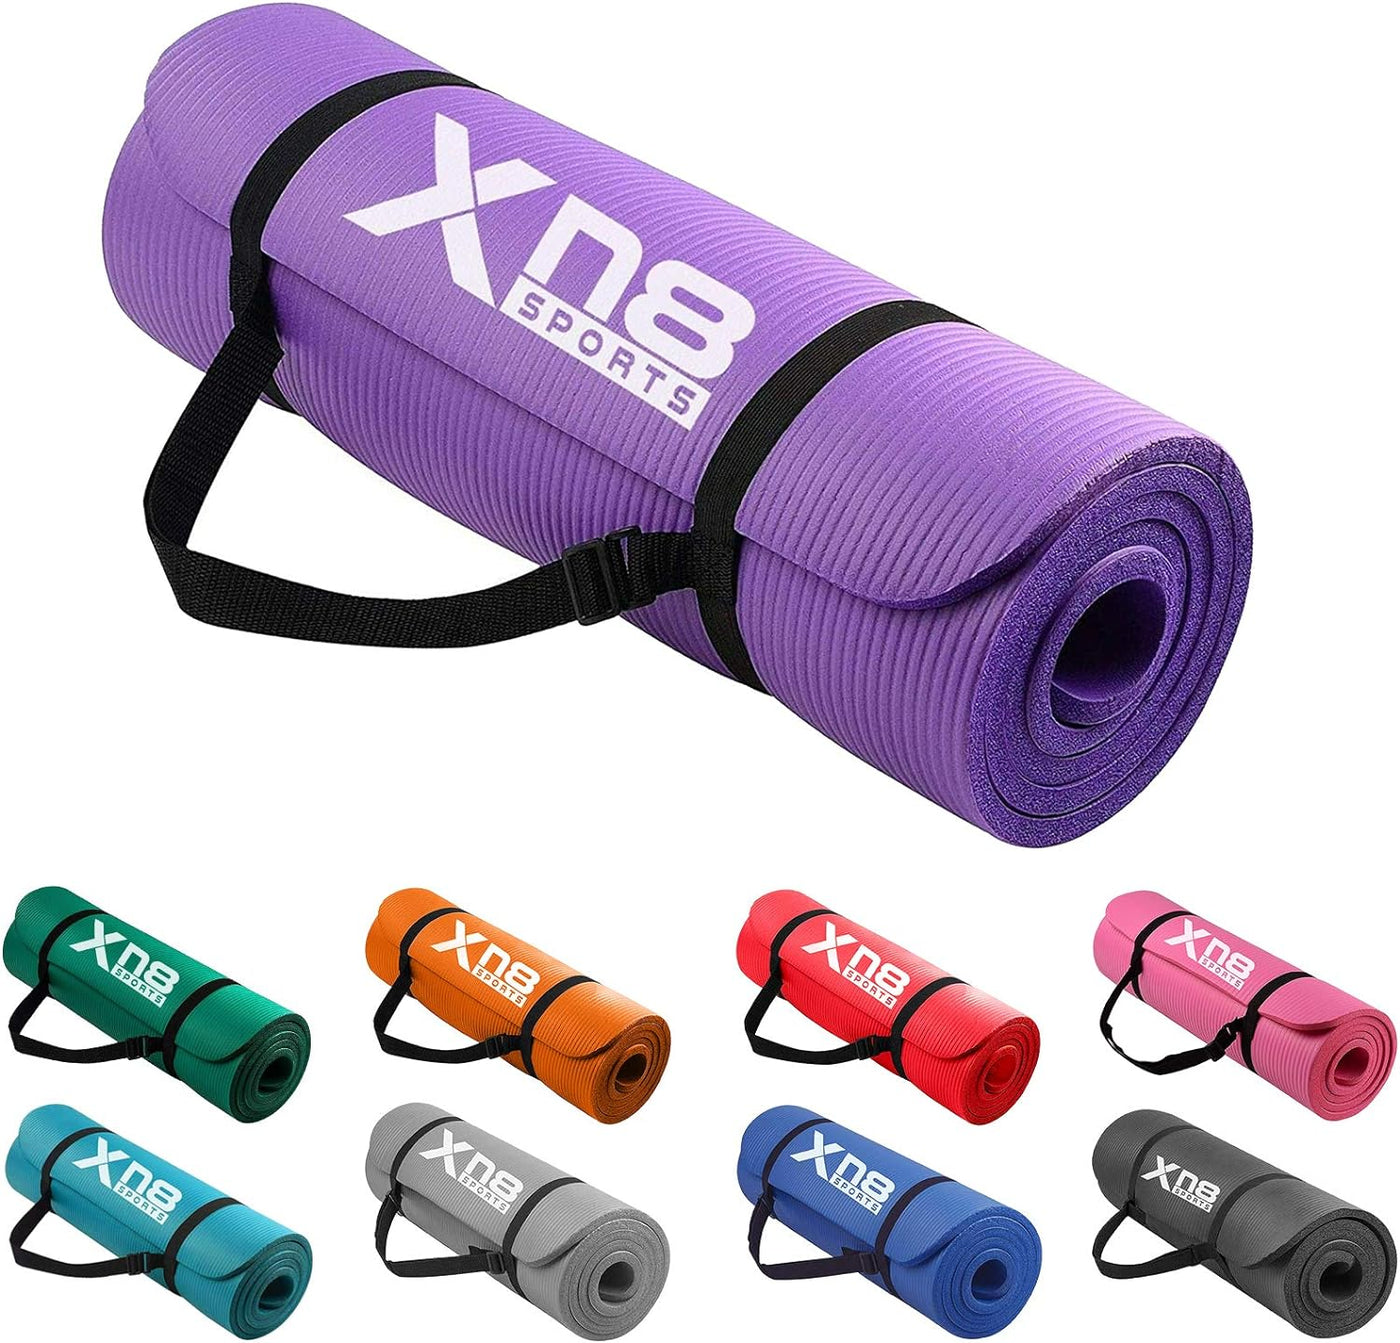 XN8 Yoga Mat 15mm Thick Gym Exercise Fitness Pilates Aerobic Workout Non Slip